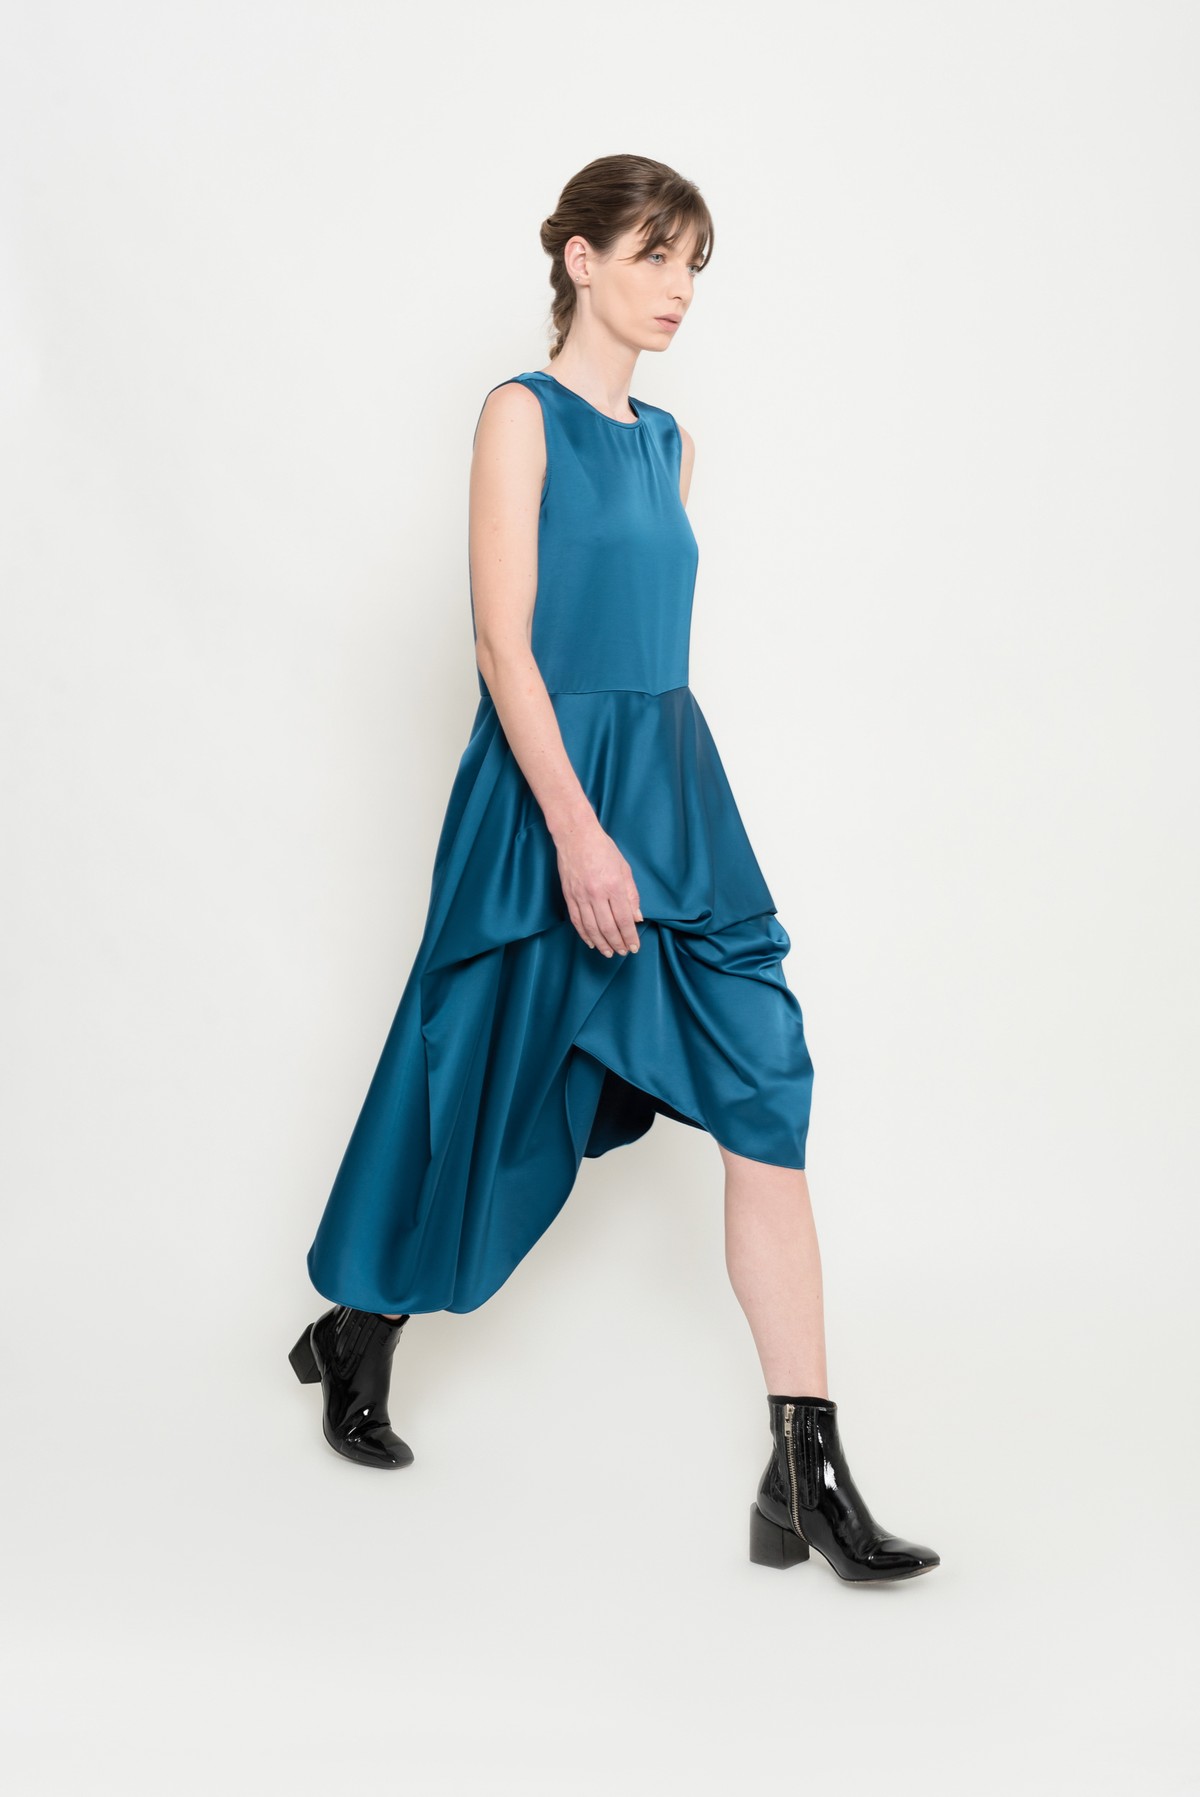 vestido assimétrico de cetim sem mangas | asymmetrical sleeveless satin dress